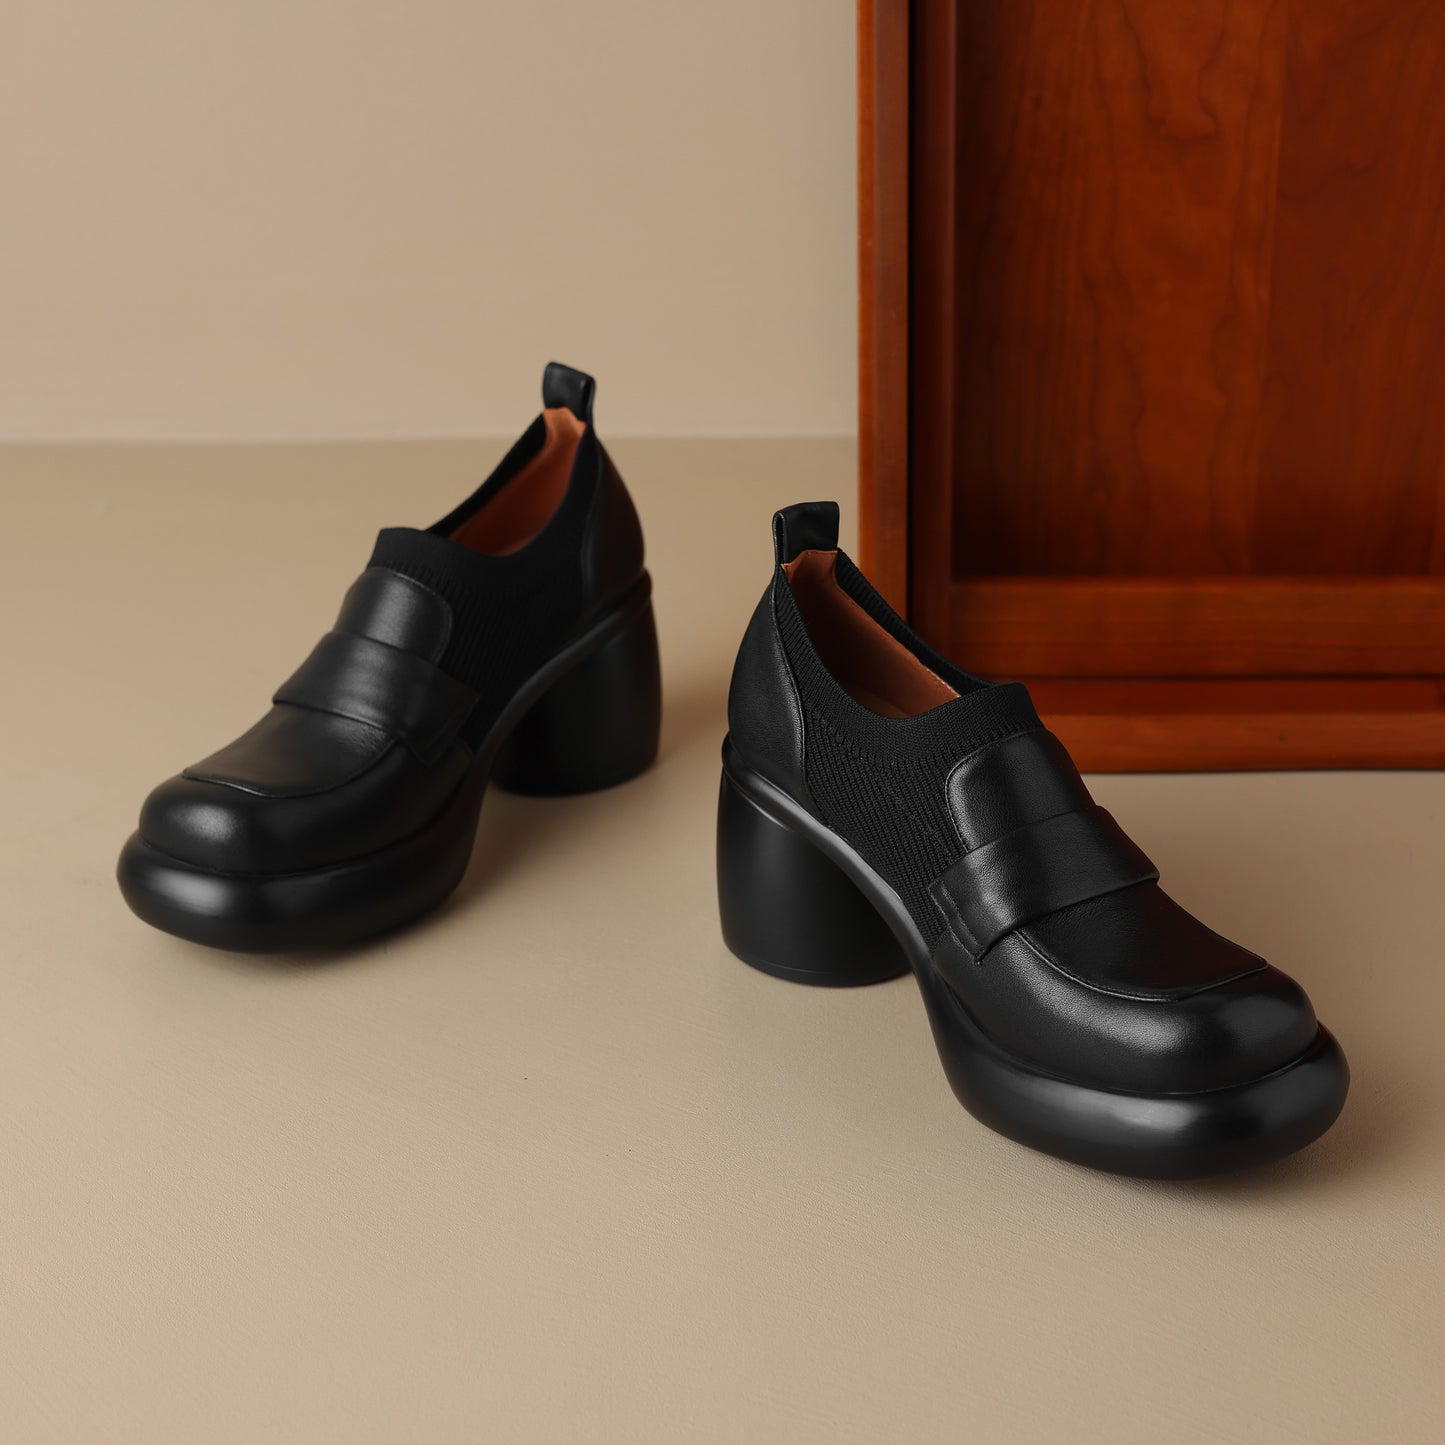 TinaCus Women's Handmade Chunky Heel Genuine Leather Round Toe Pumps Shoes